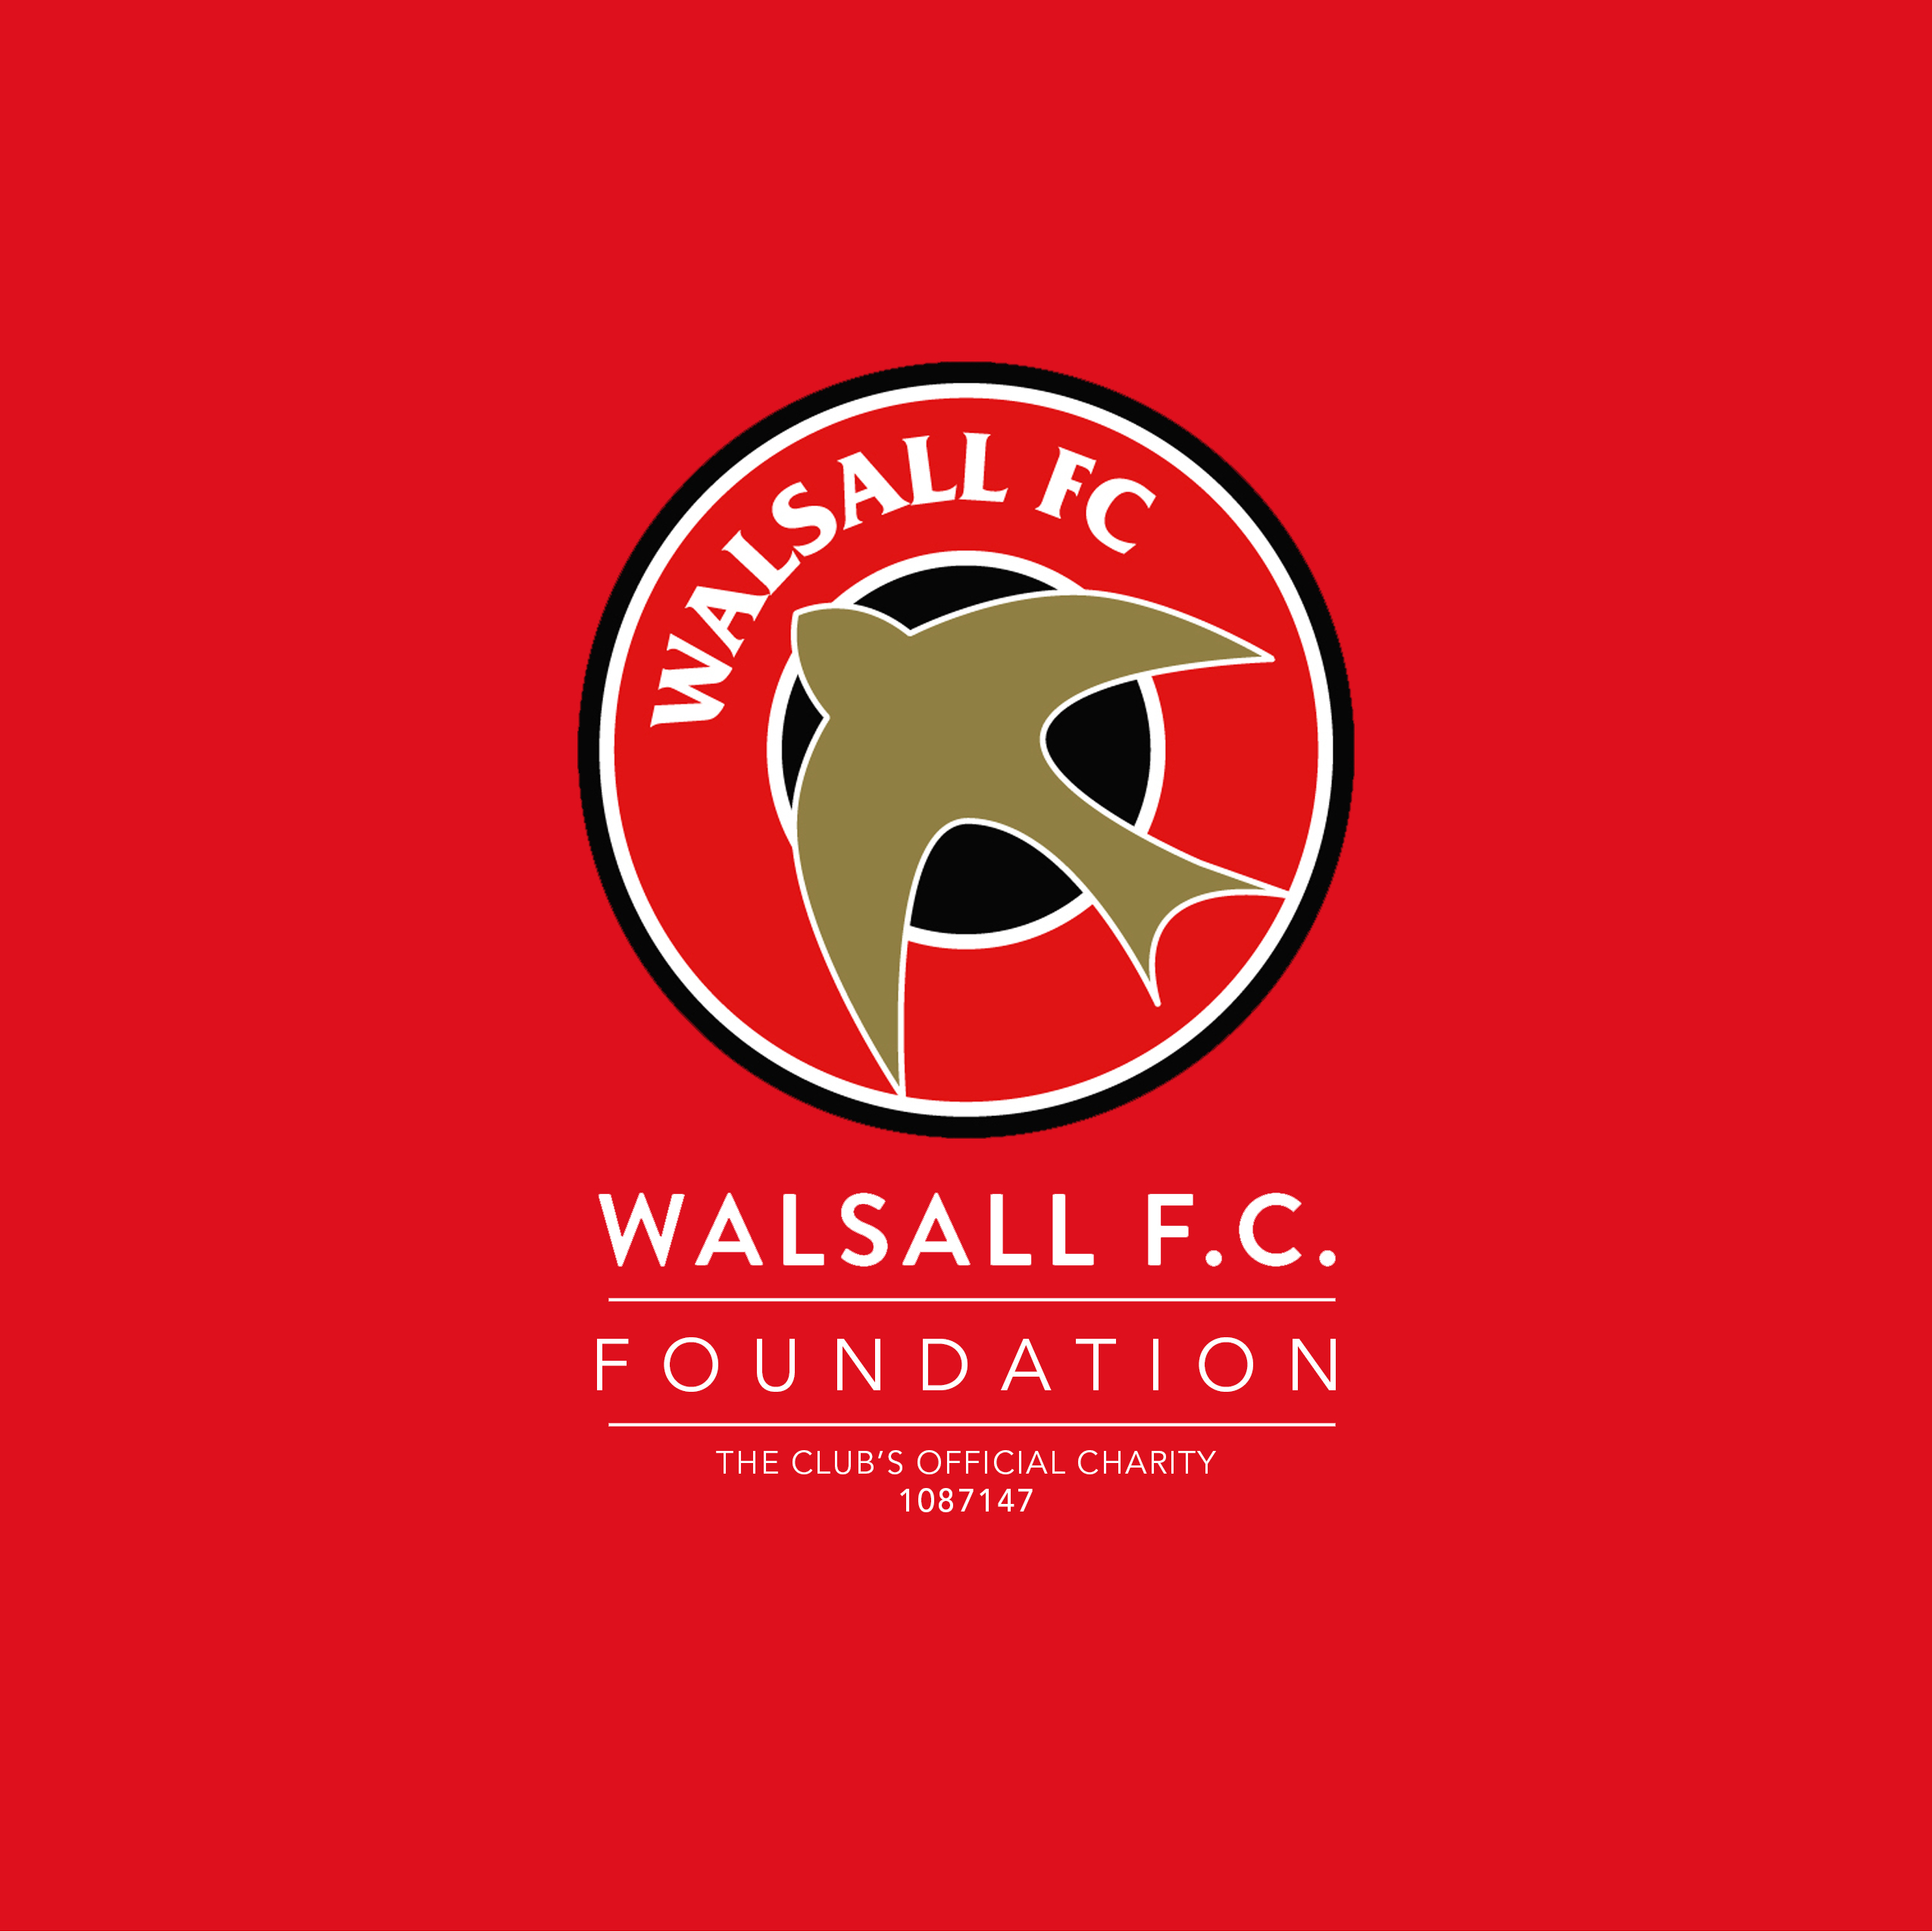 Walsall FC Foundation - Portrait Red.jpg